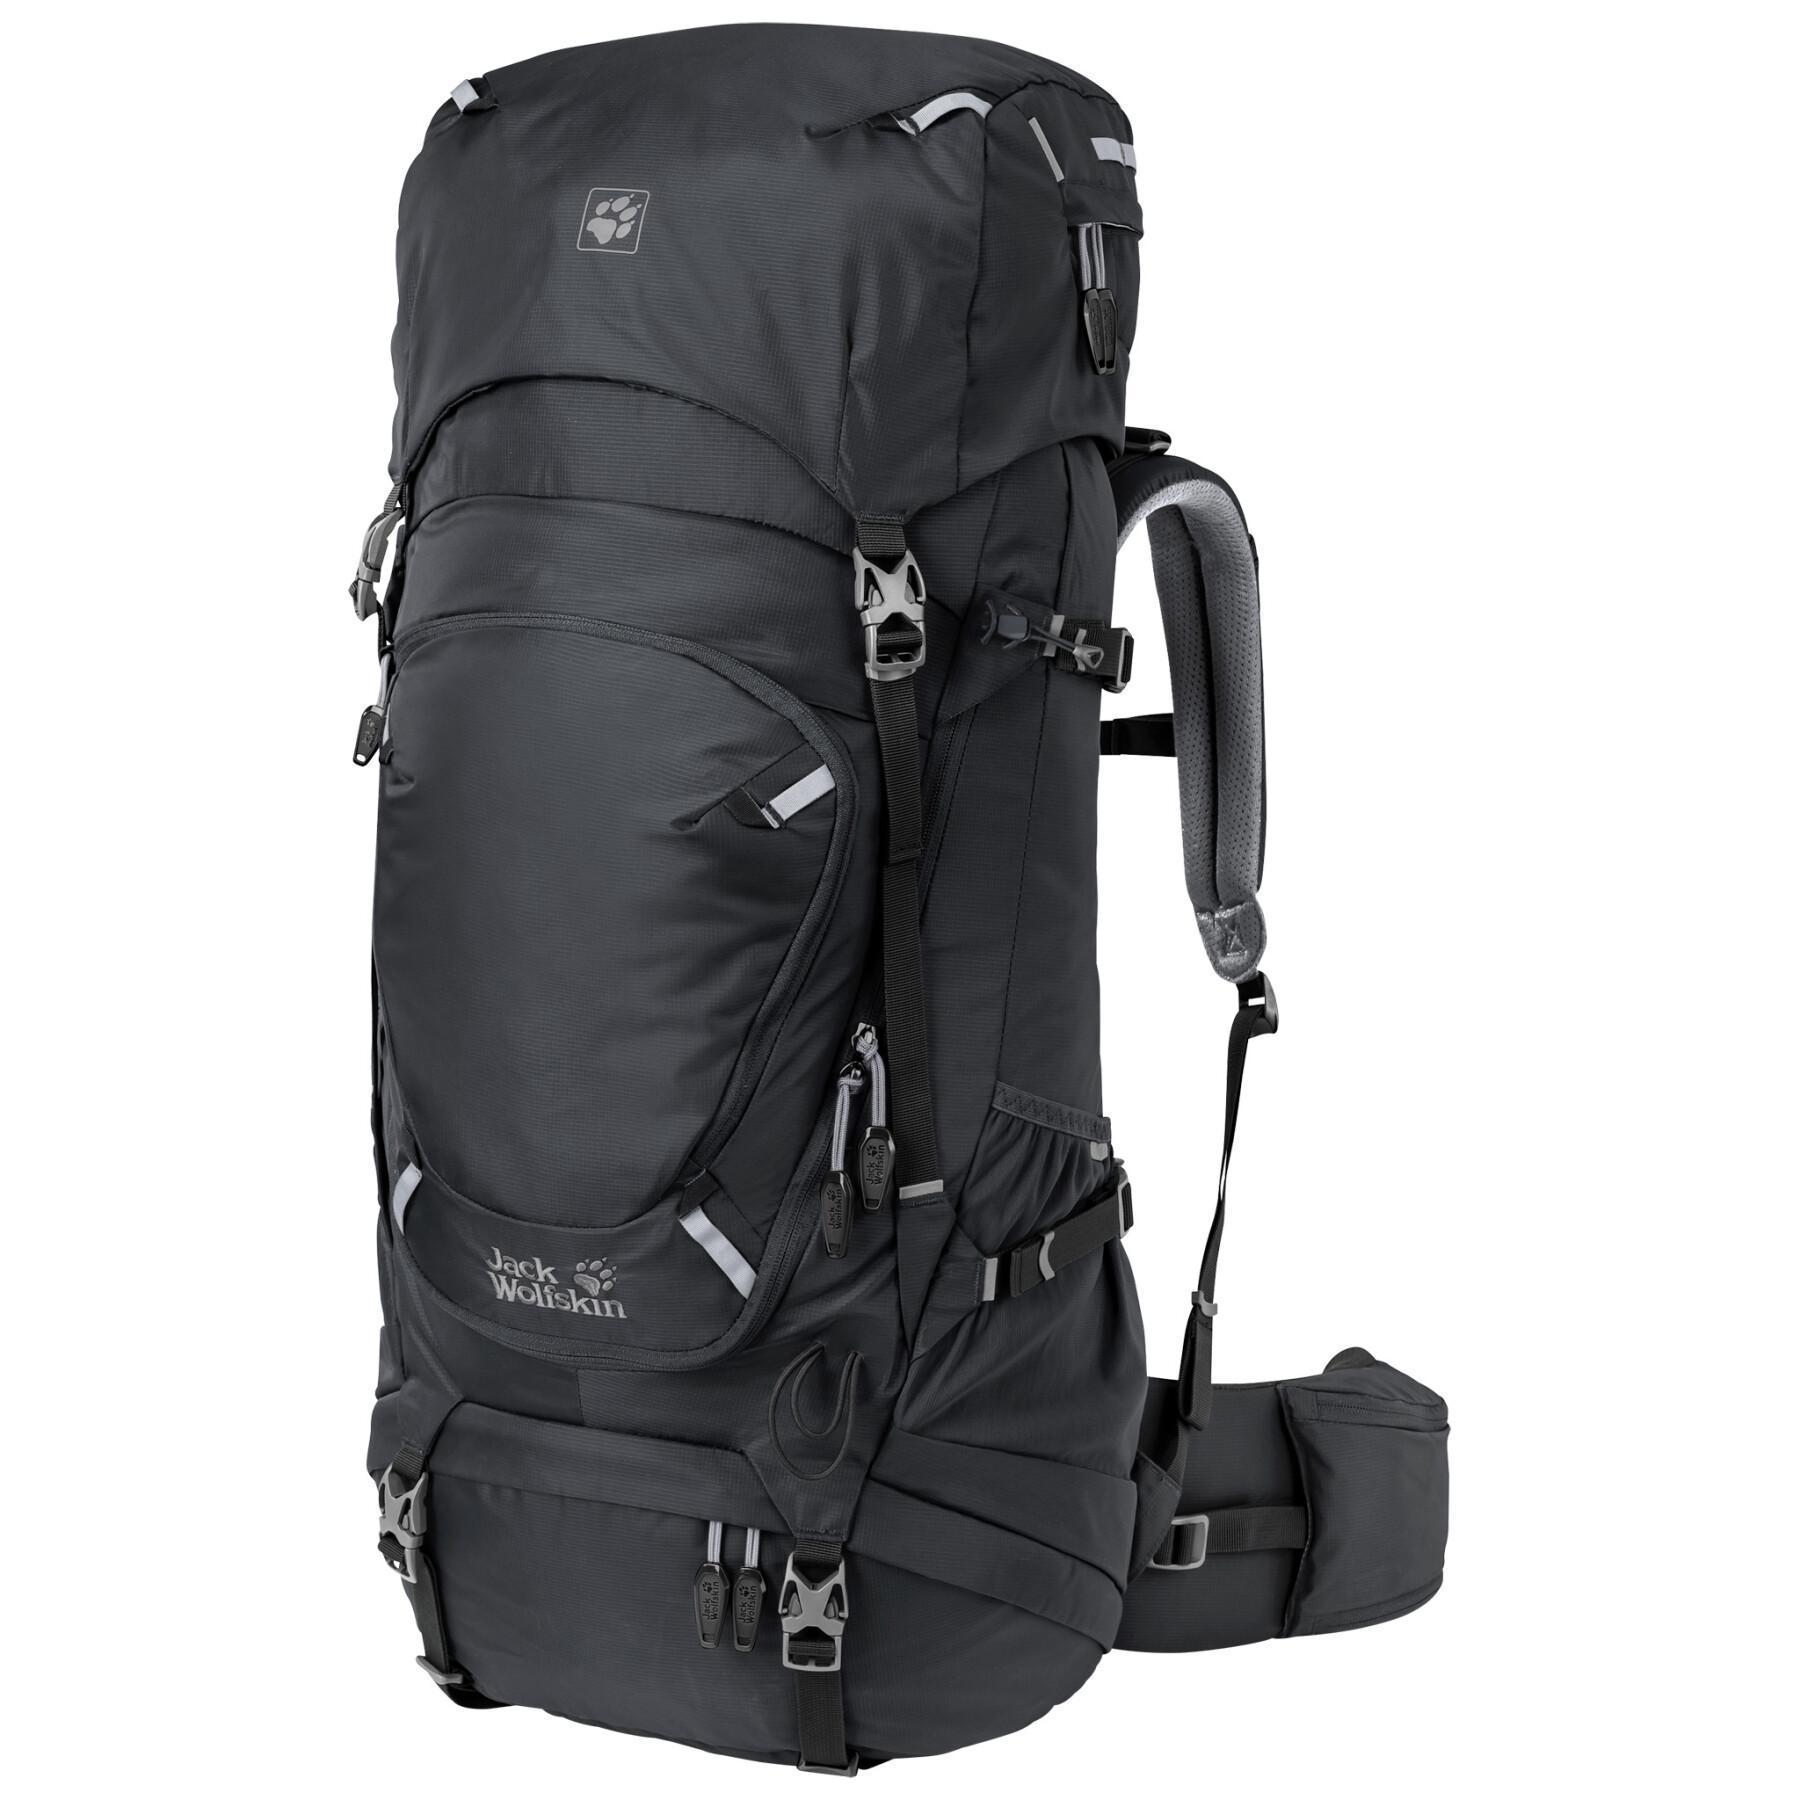 Backpack Jack Wolfskin highland trail 50